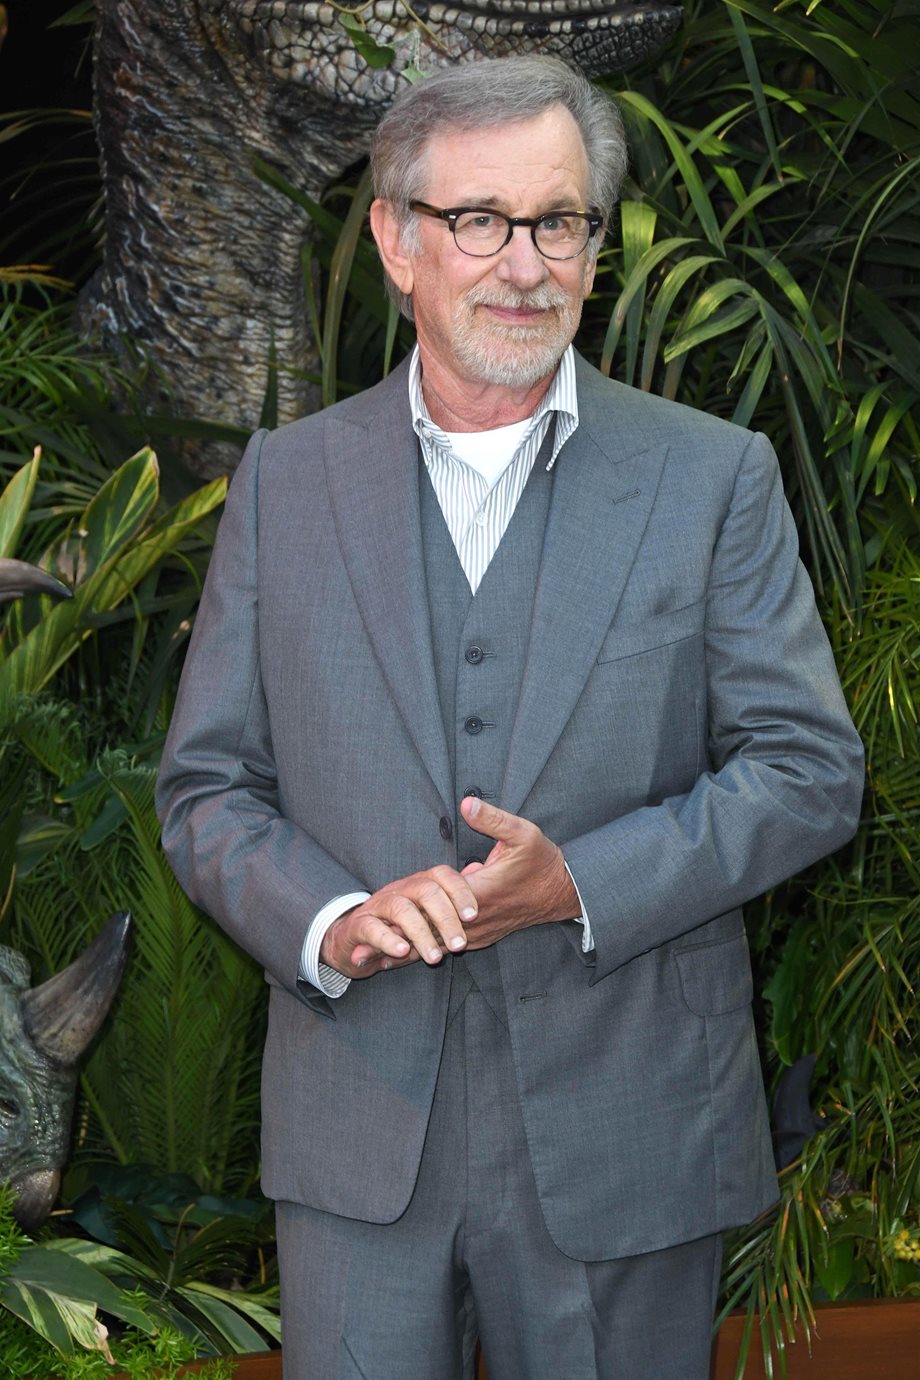 Steven Spielberg : Η υιοθετημένη κόρη του ανακοίνωσε ότι έγινε πορνοστάρ